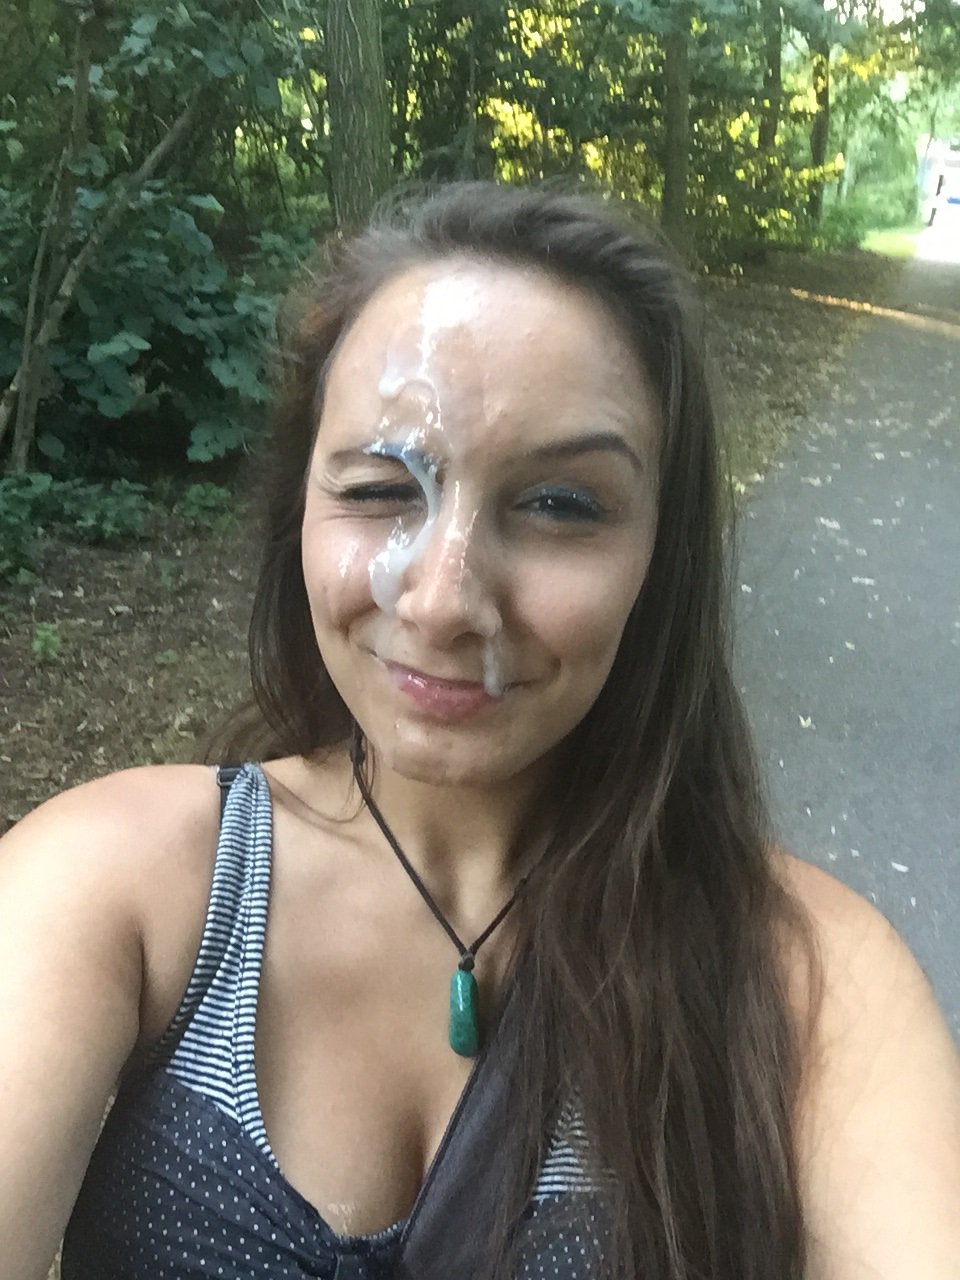 Mariah Leonne on Twitter: "Public park outddoor facial by @Mariah_Leon...